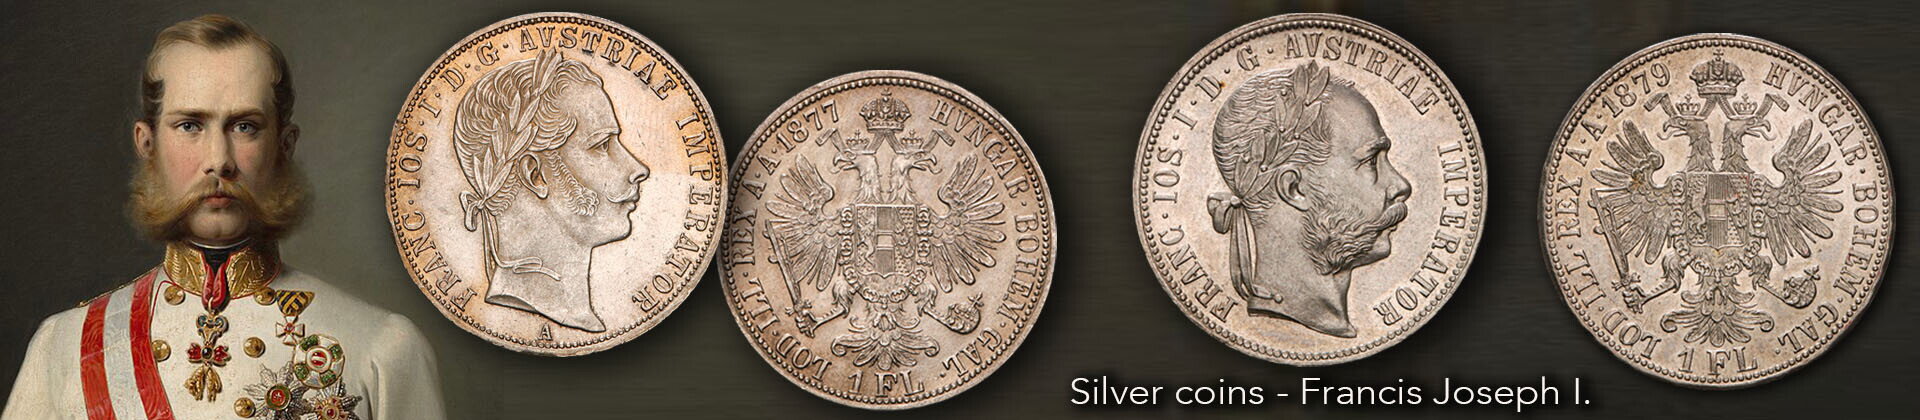 Francis Joseph I. - silver coins